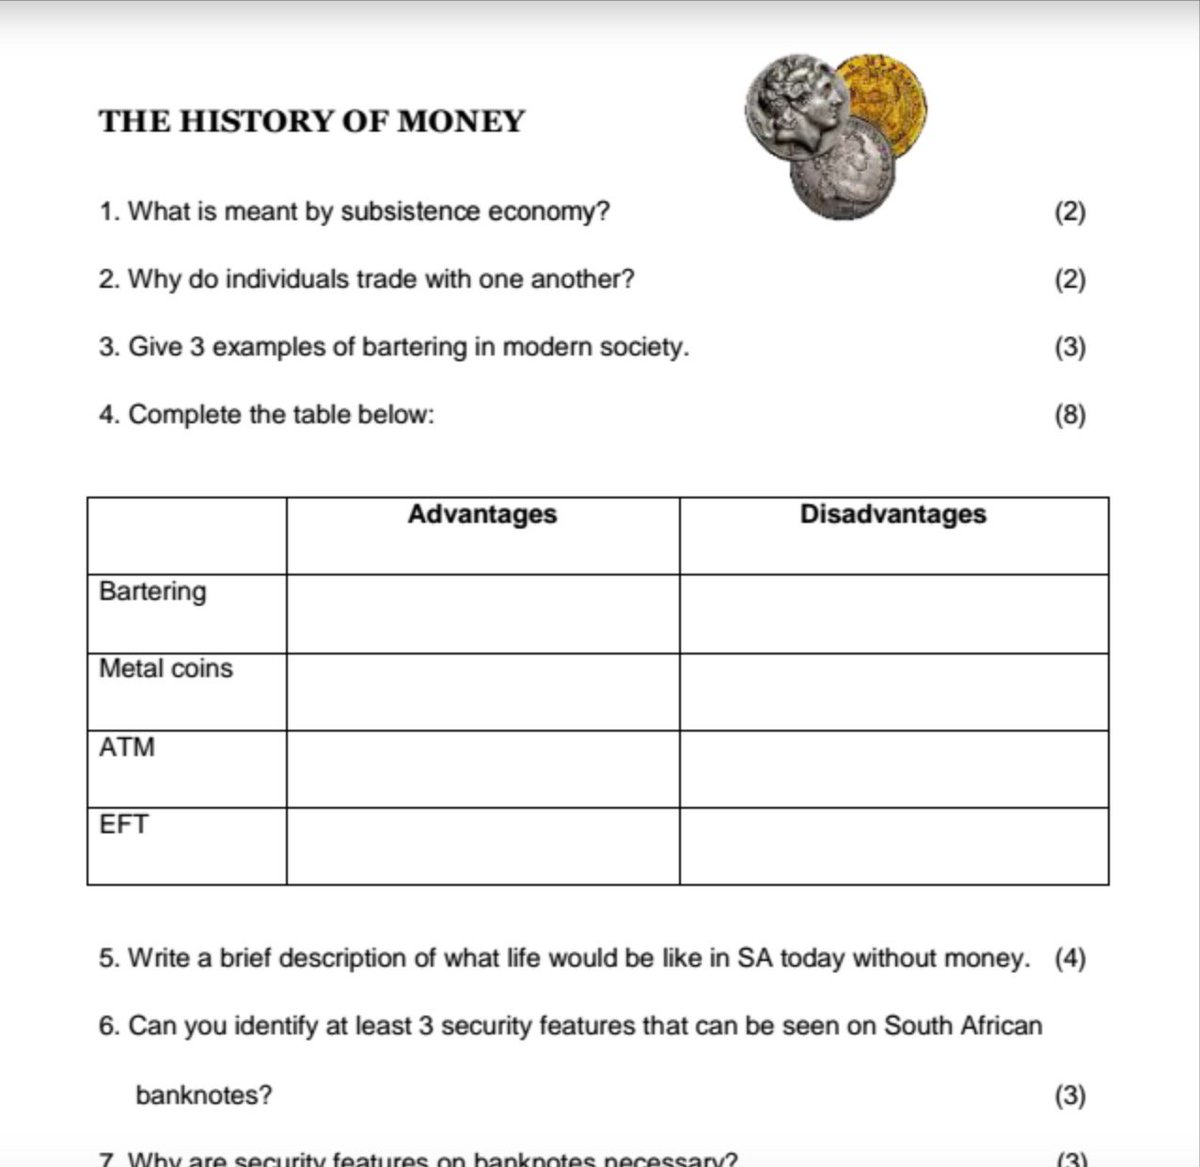 nolwazi oers on twitter great worksheet on history of money gr7 ems https t co t8j3fqj4vr oer https t co jyzgf9k3yh twitter